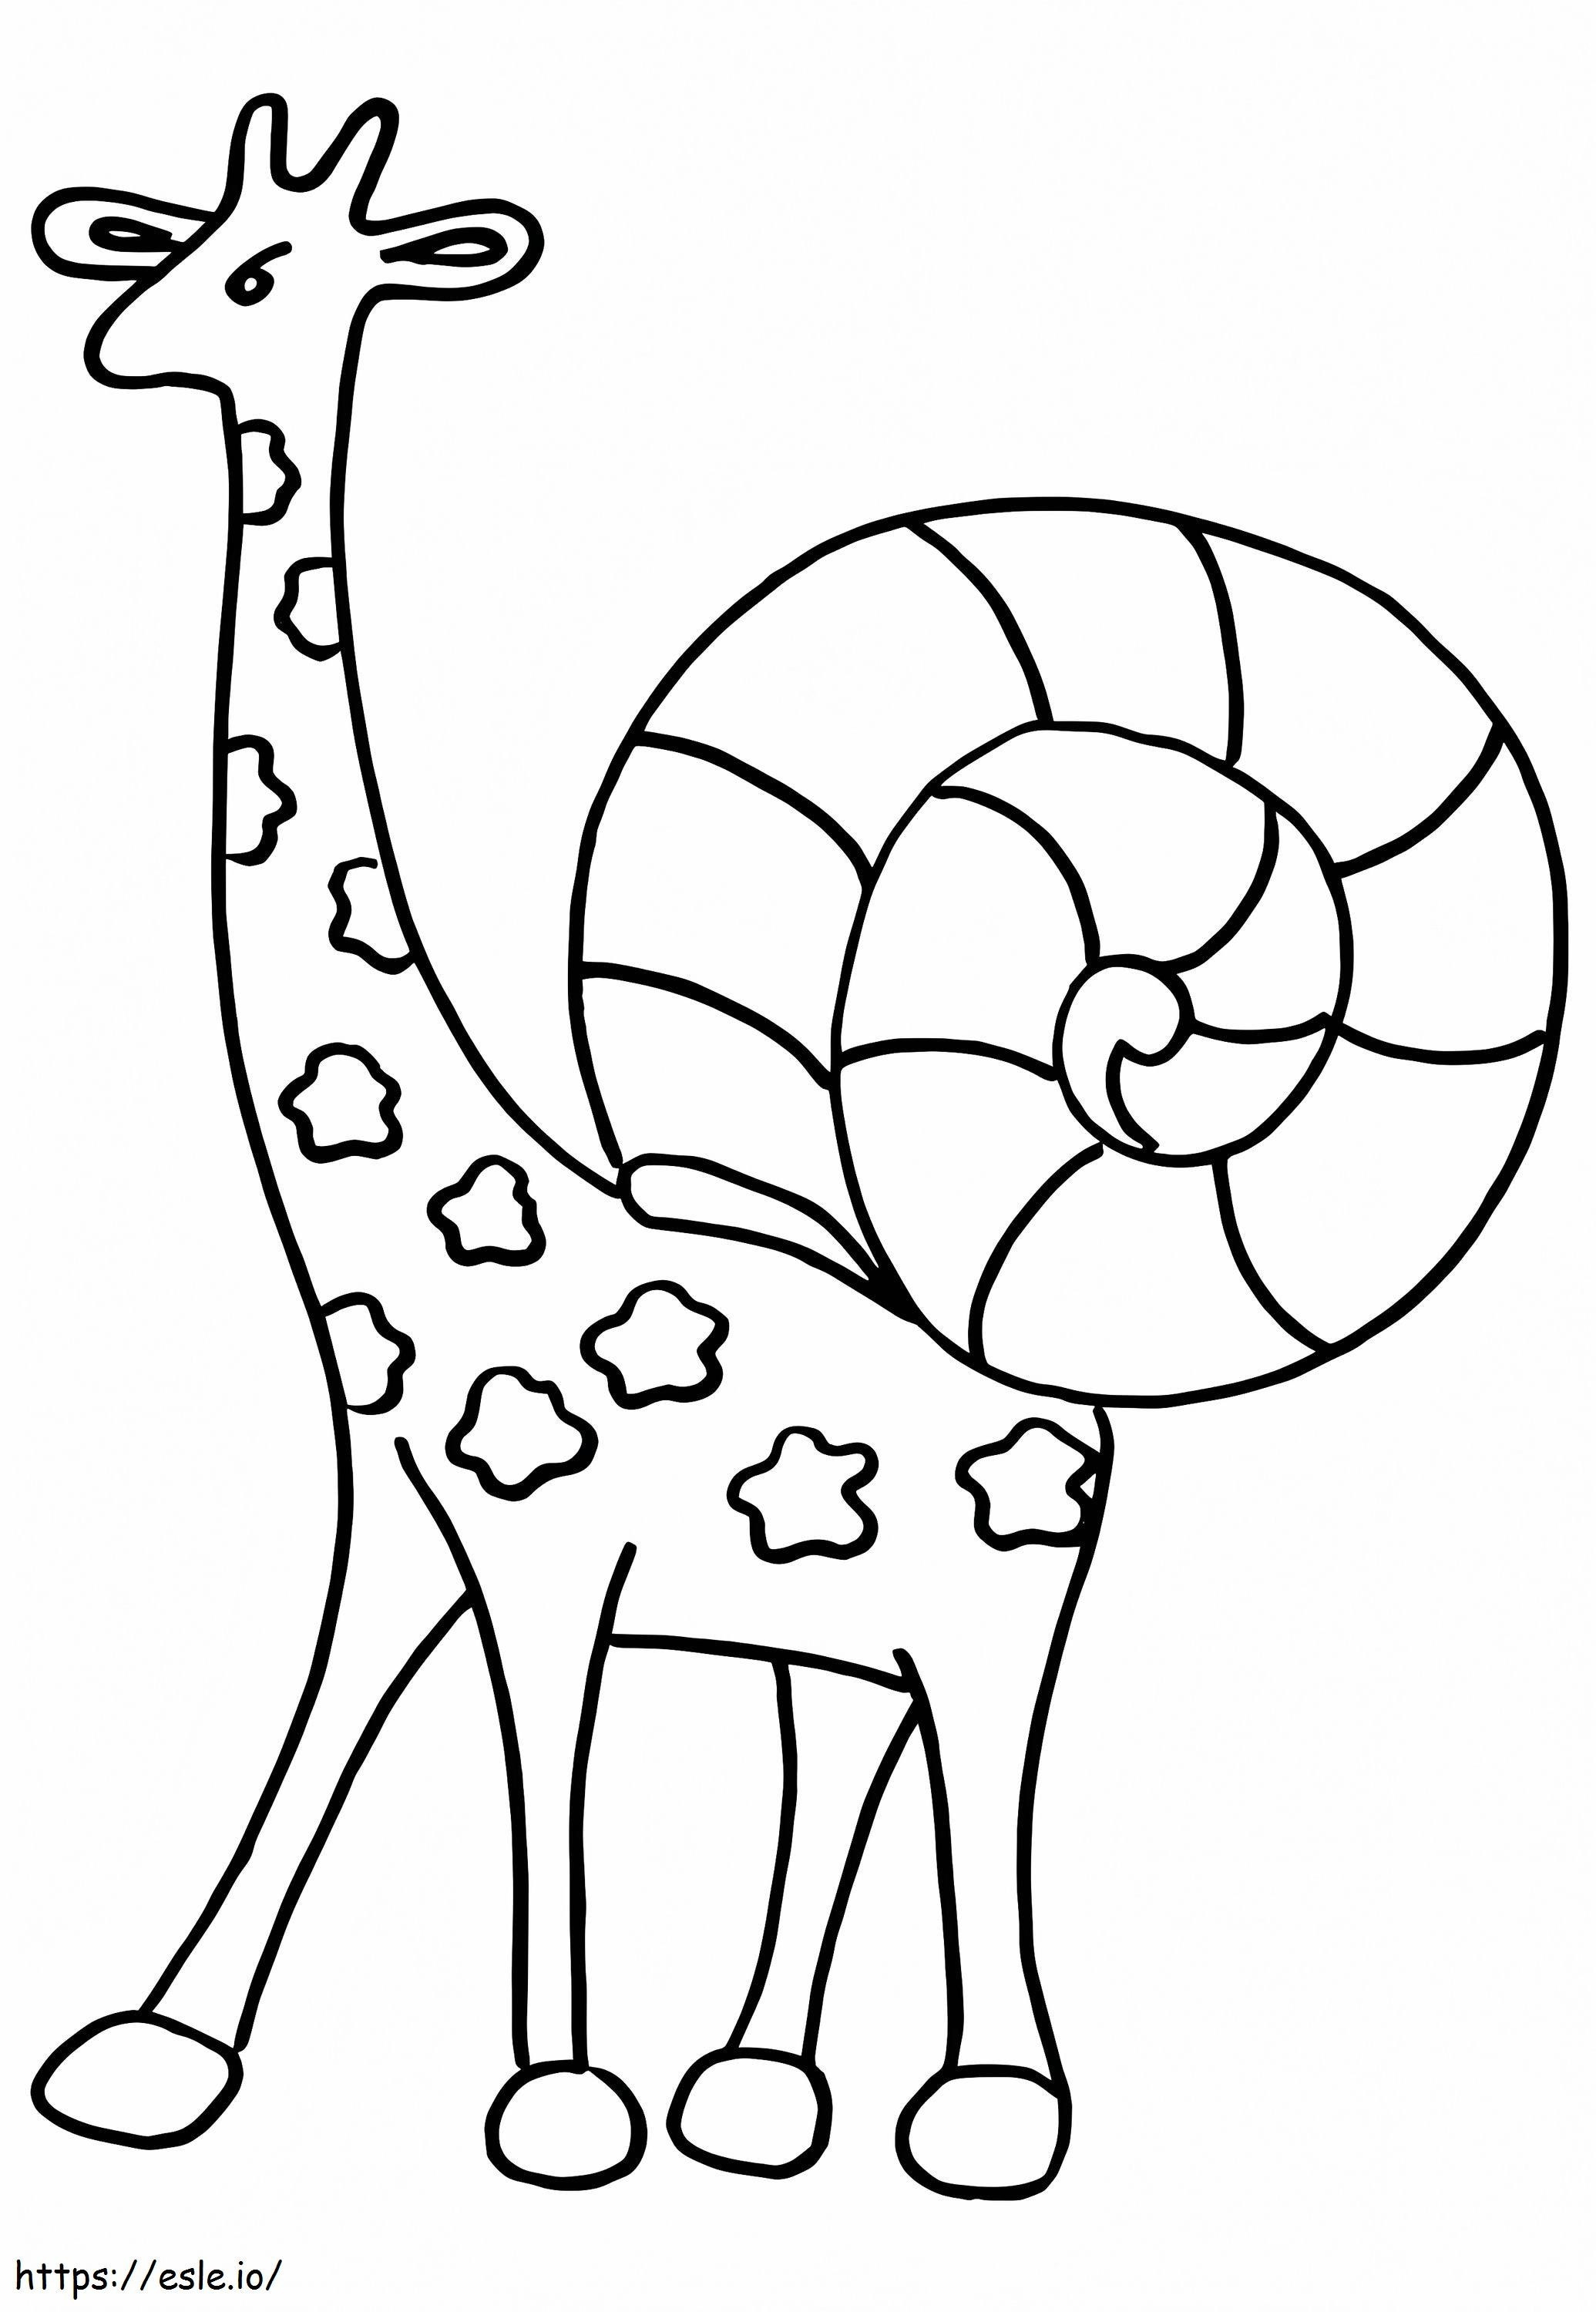 Giraffe Snail Alebrije coloring page